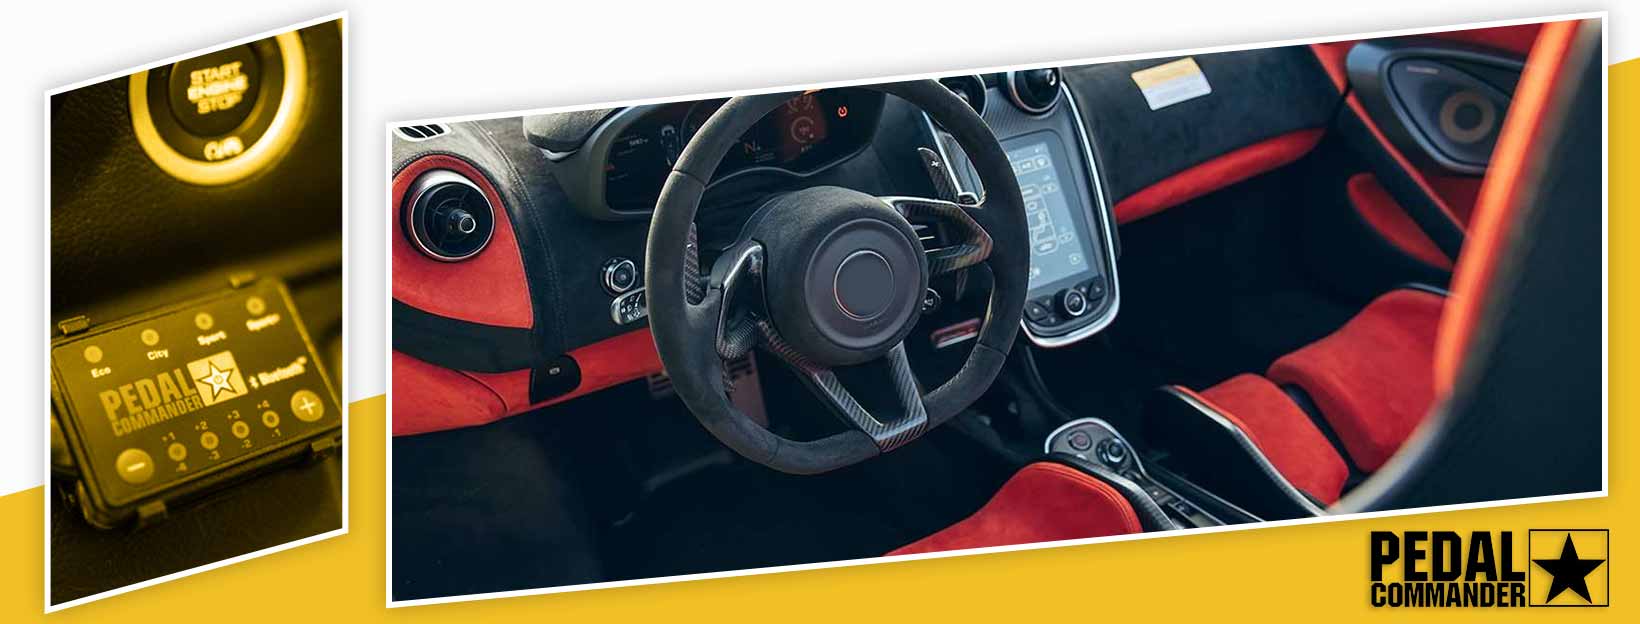 Pedal Commander for McLaren 600LT - interior